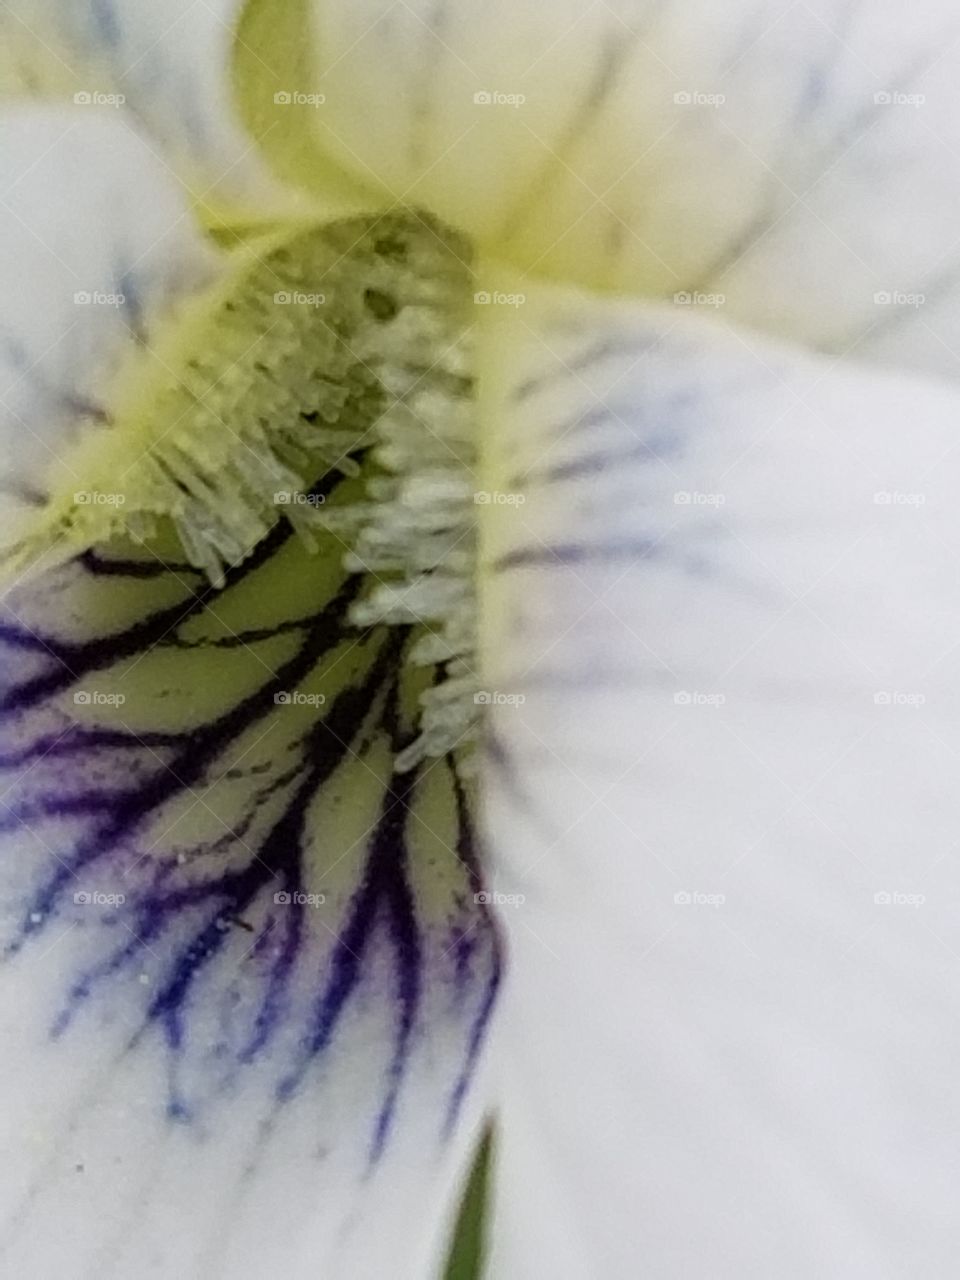 inside a flower